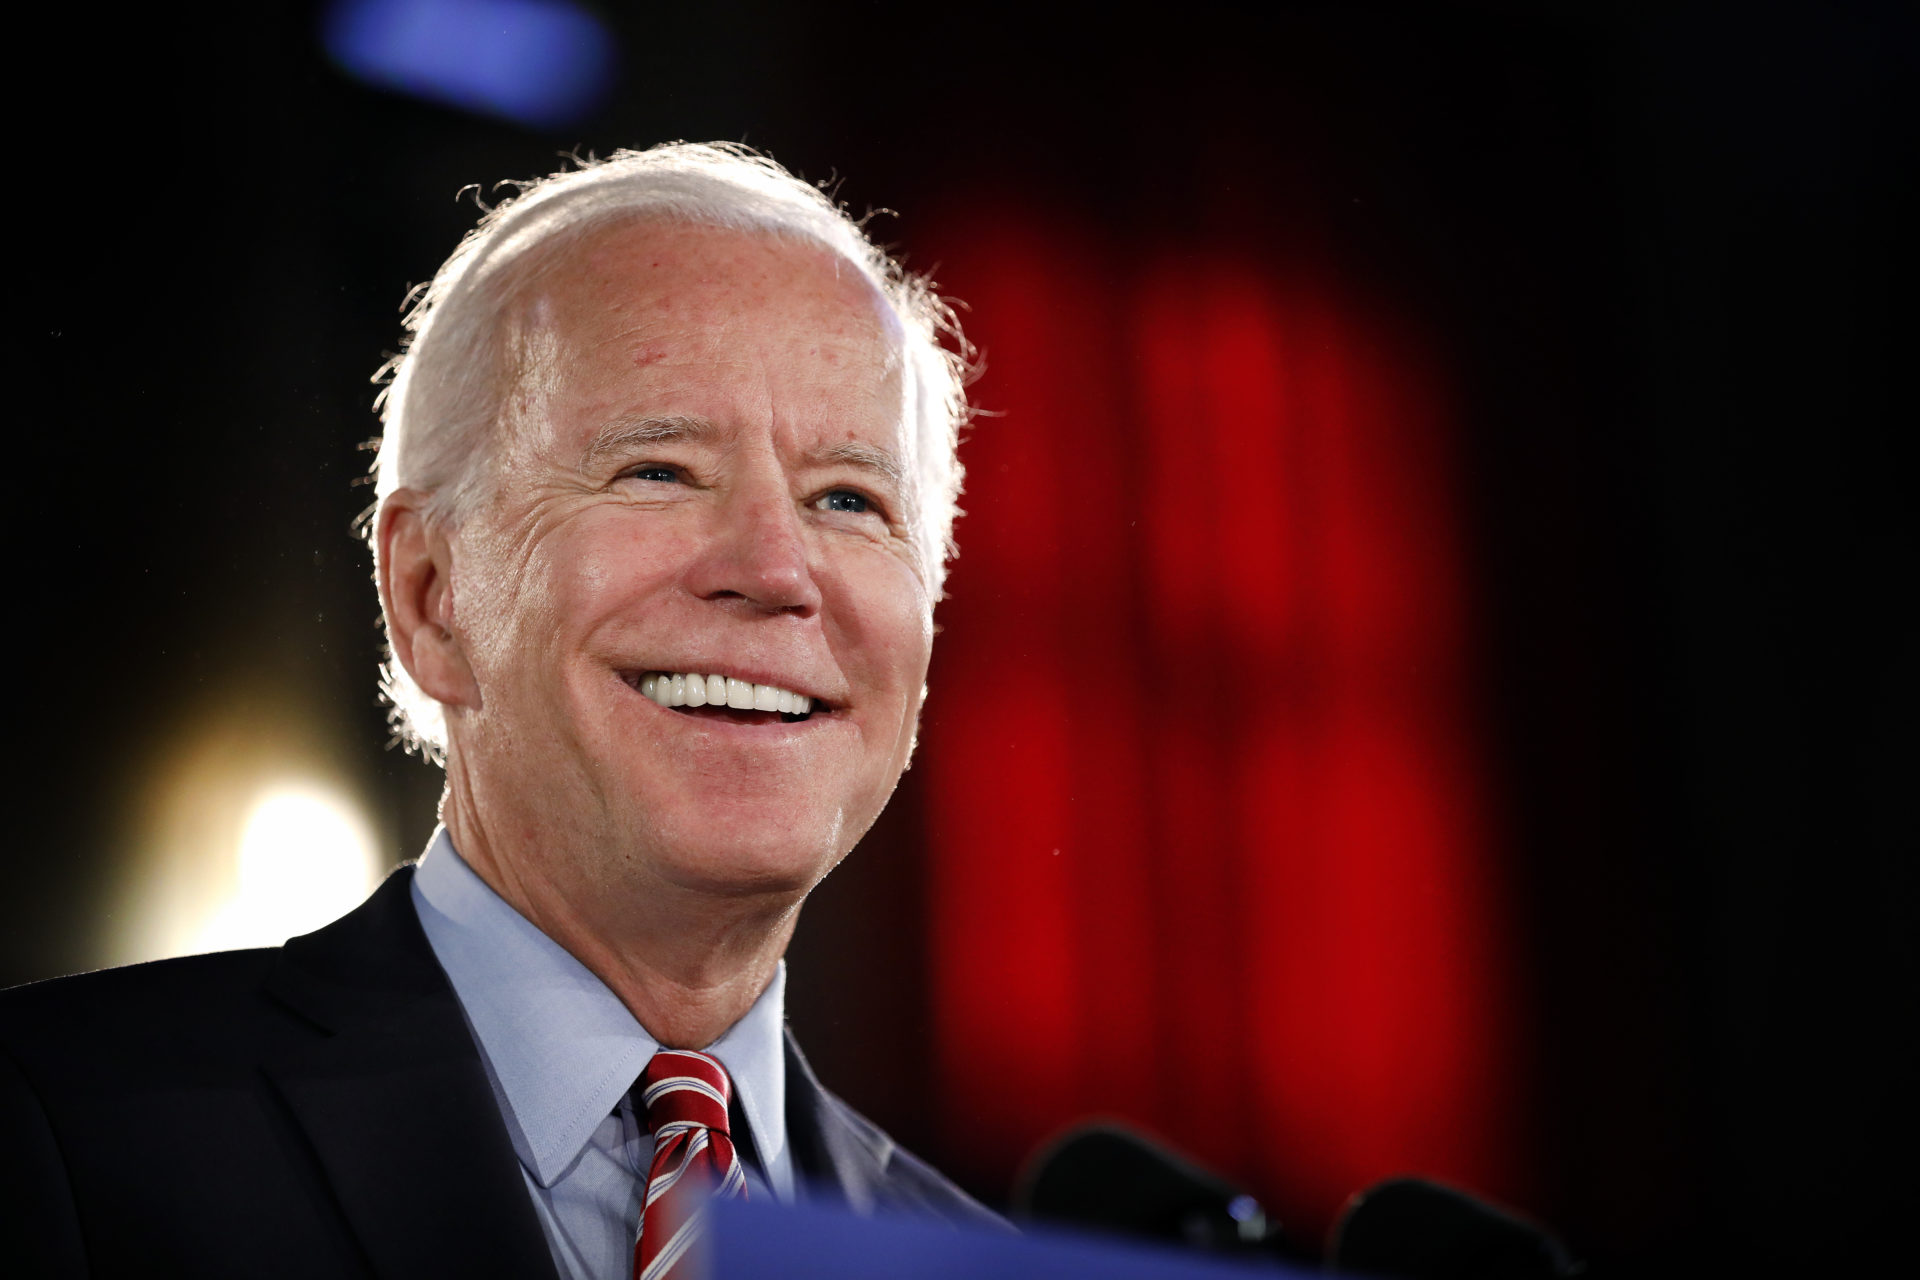 Presidential Candidate Joe Biden Delivers Economic Policy Speech In Scranton, PA